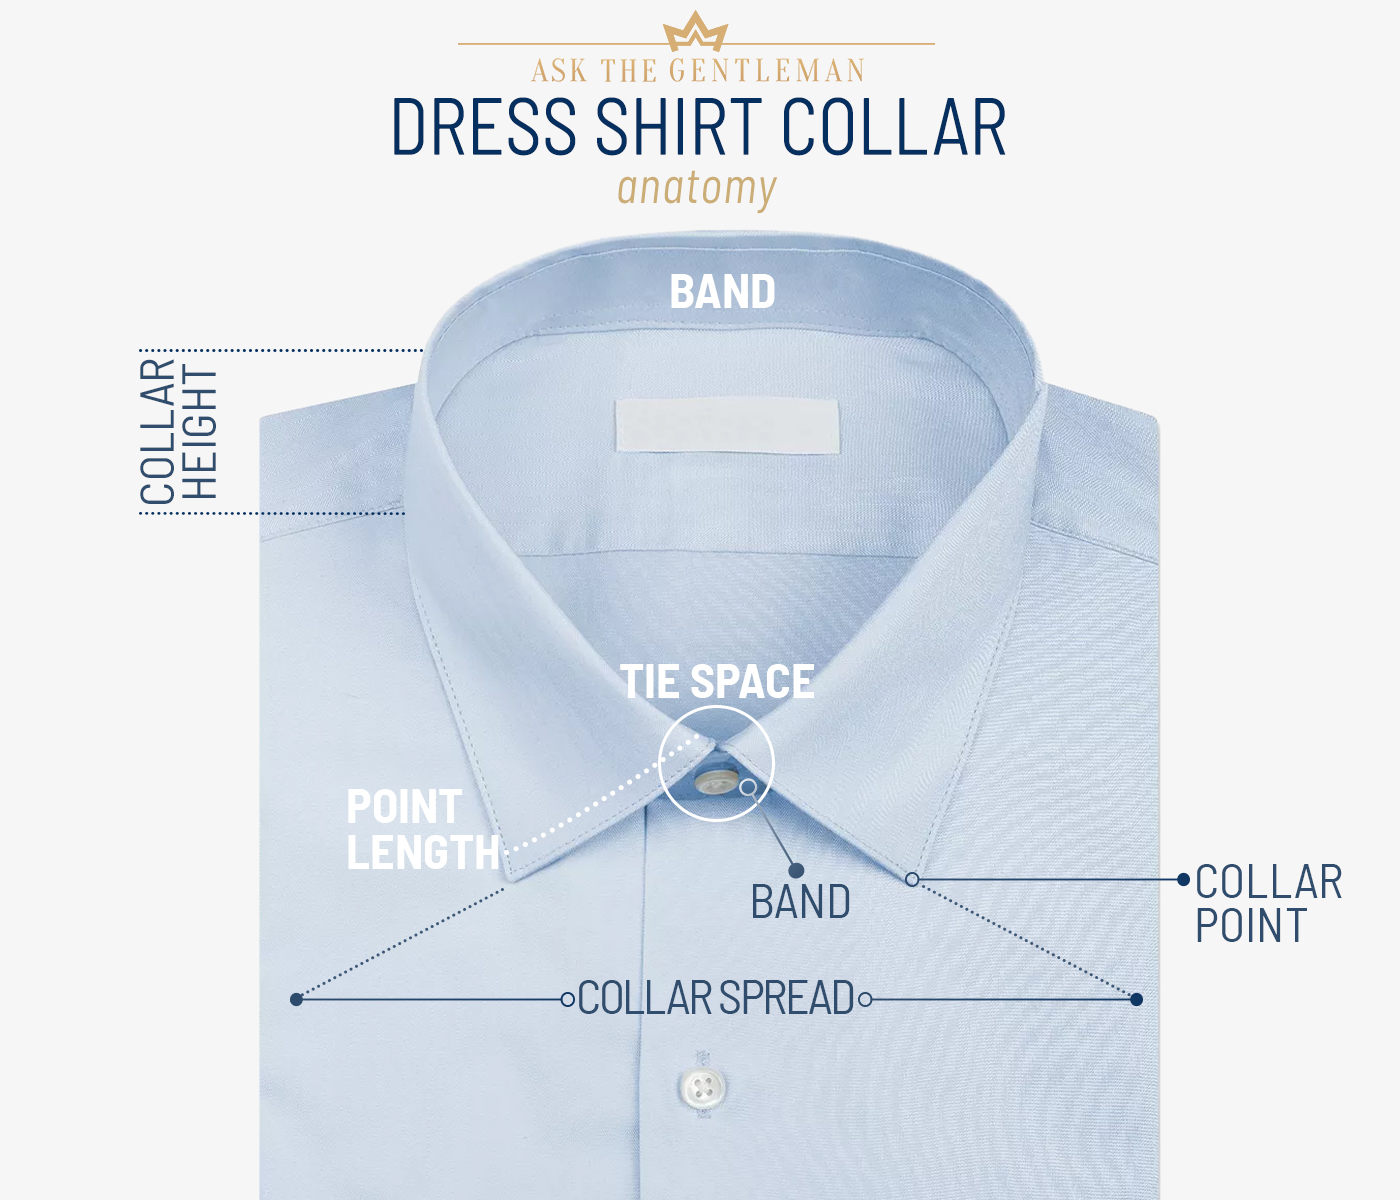 The anatomy of a dress shirt collar